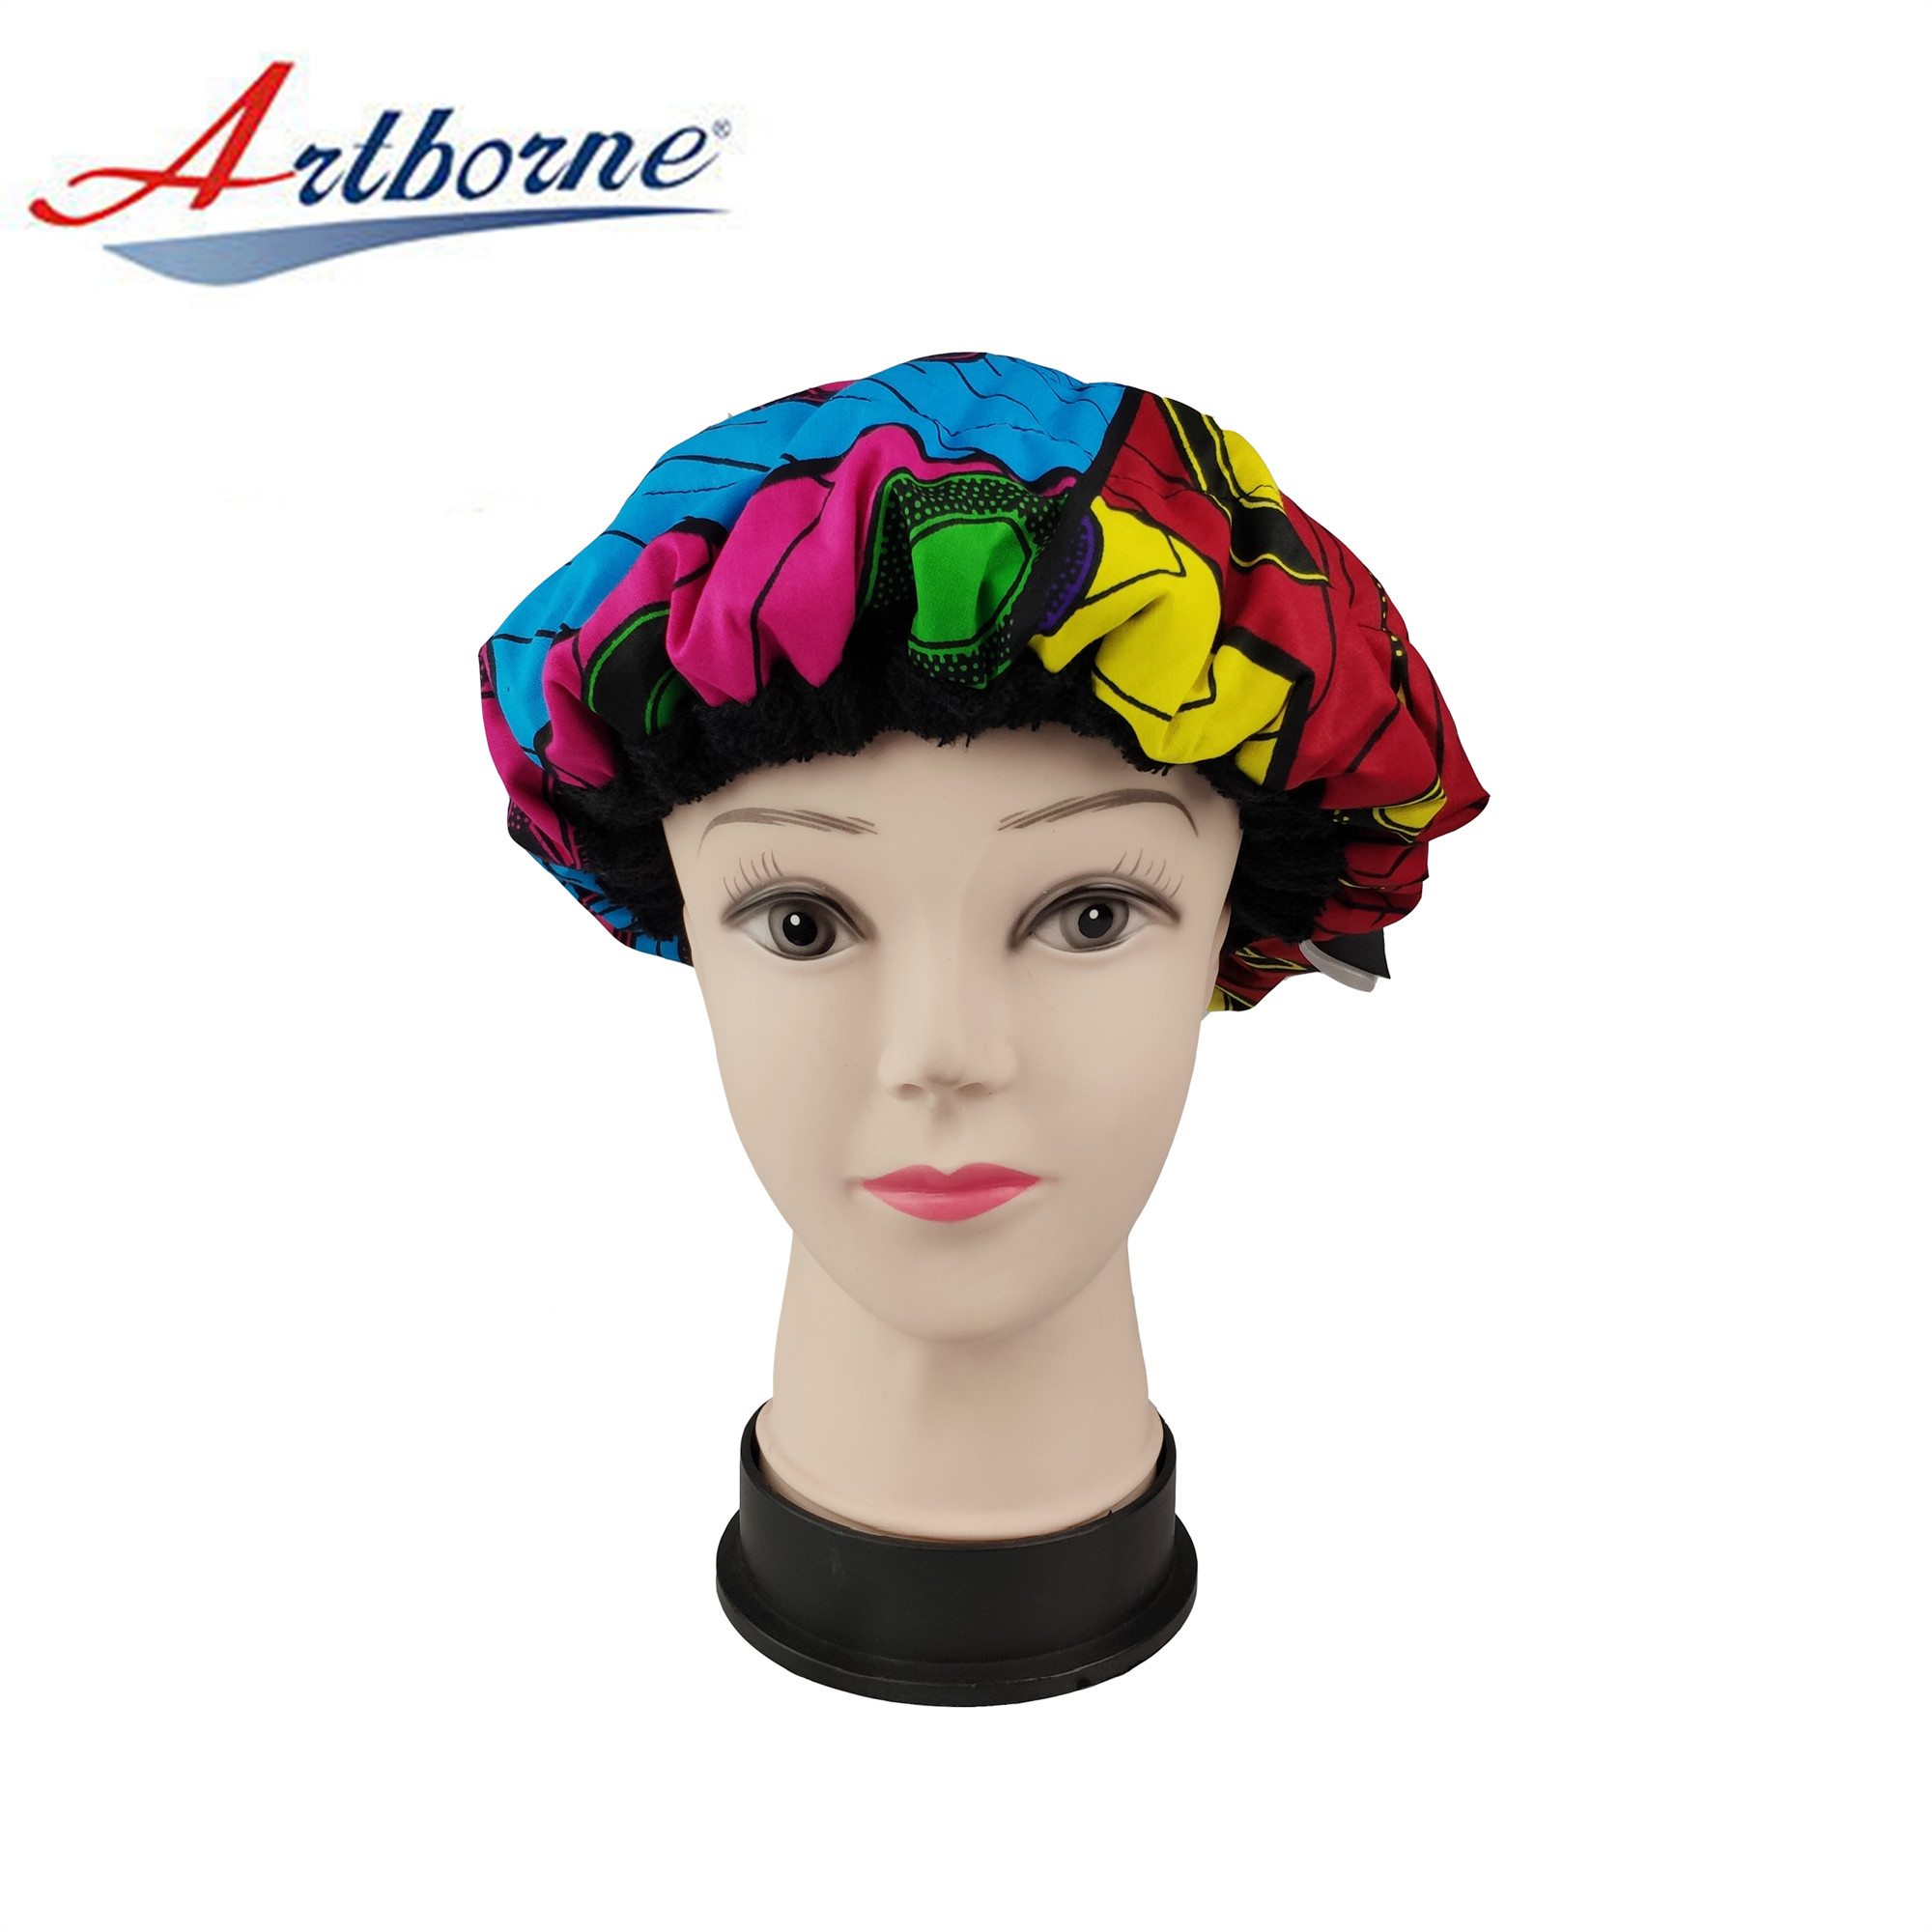 Artborne mask heat treat hair cap factory for shower-46